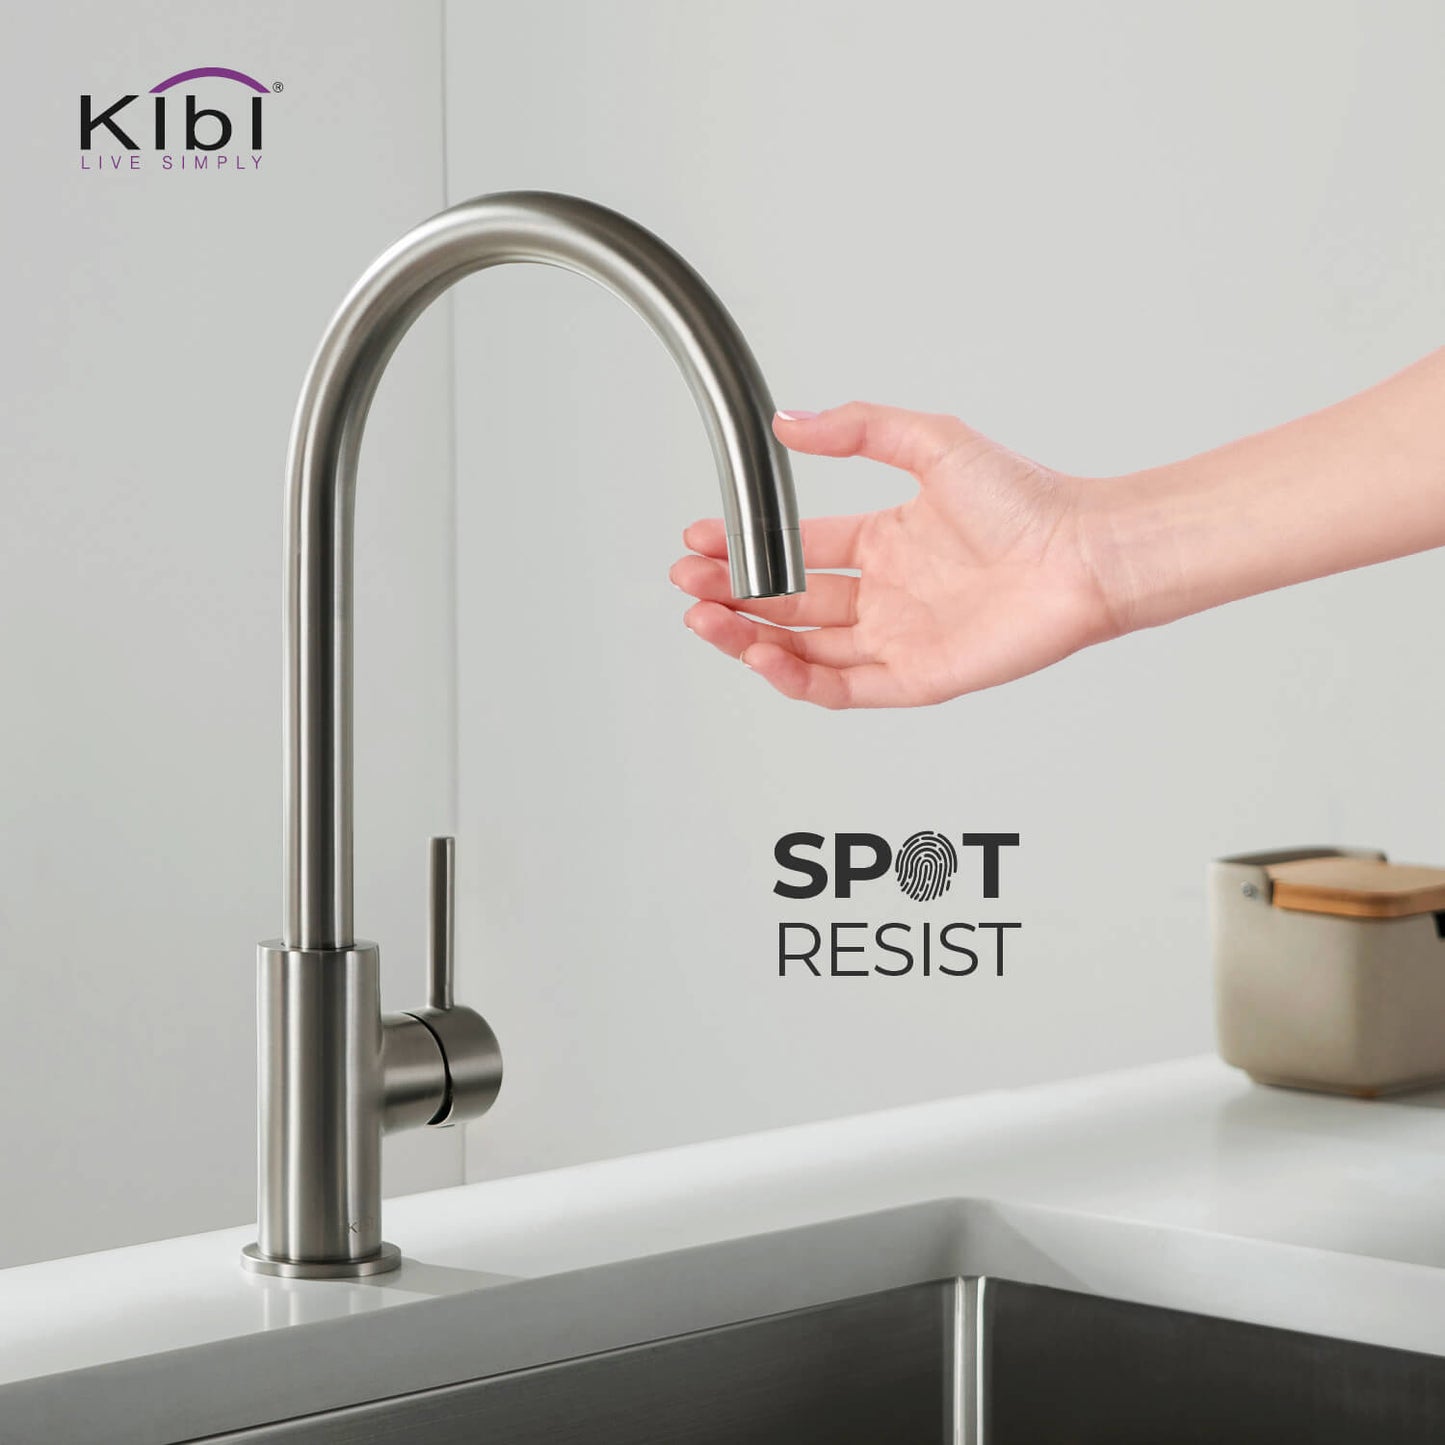 Kibi Lowa Single Handle High Arc Kitchen Bar Sink Faucet in Brushed Nickel Finish